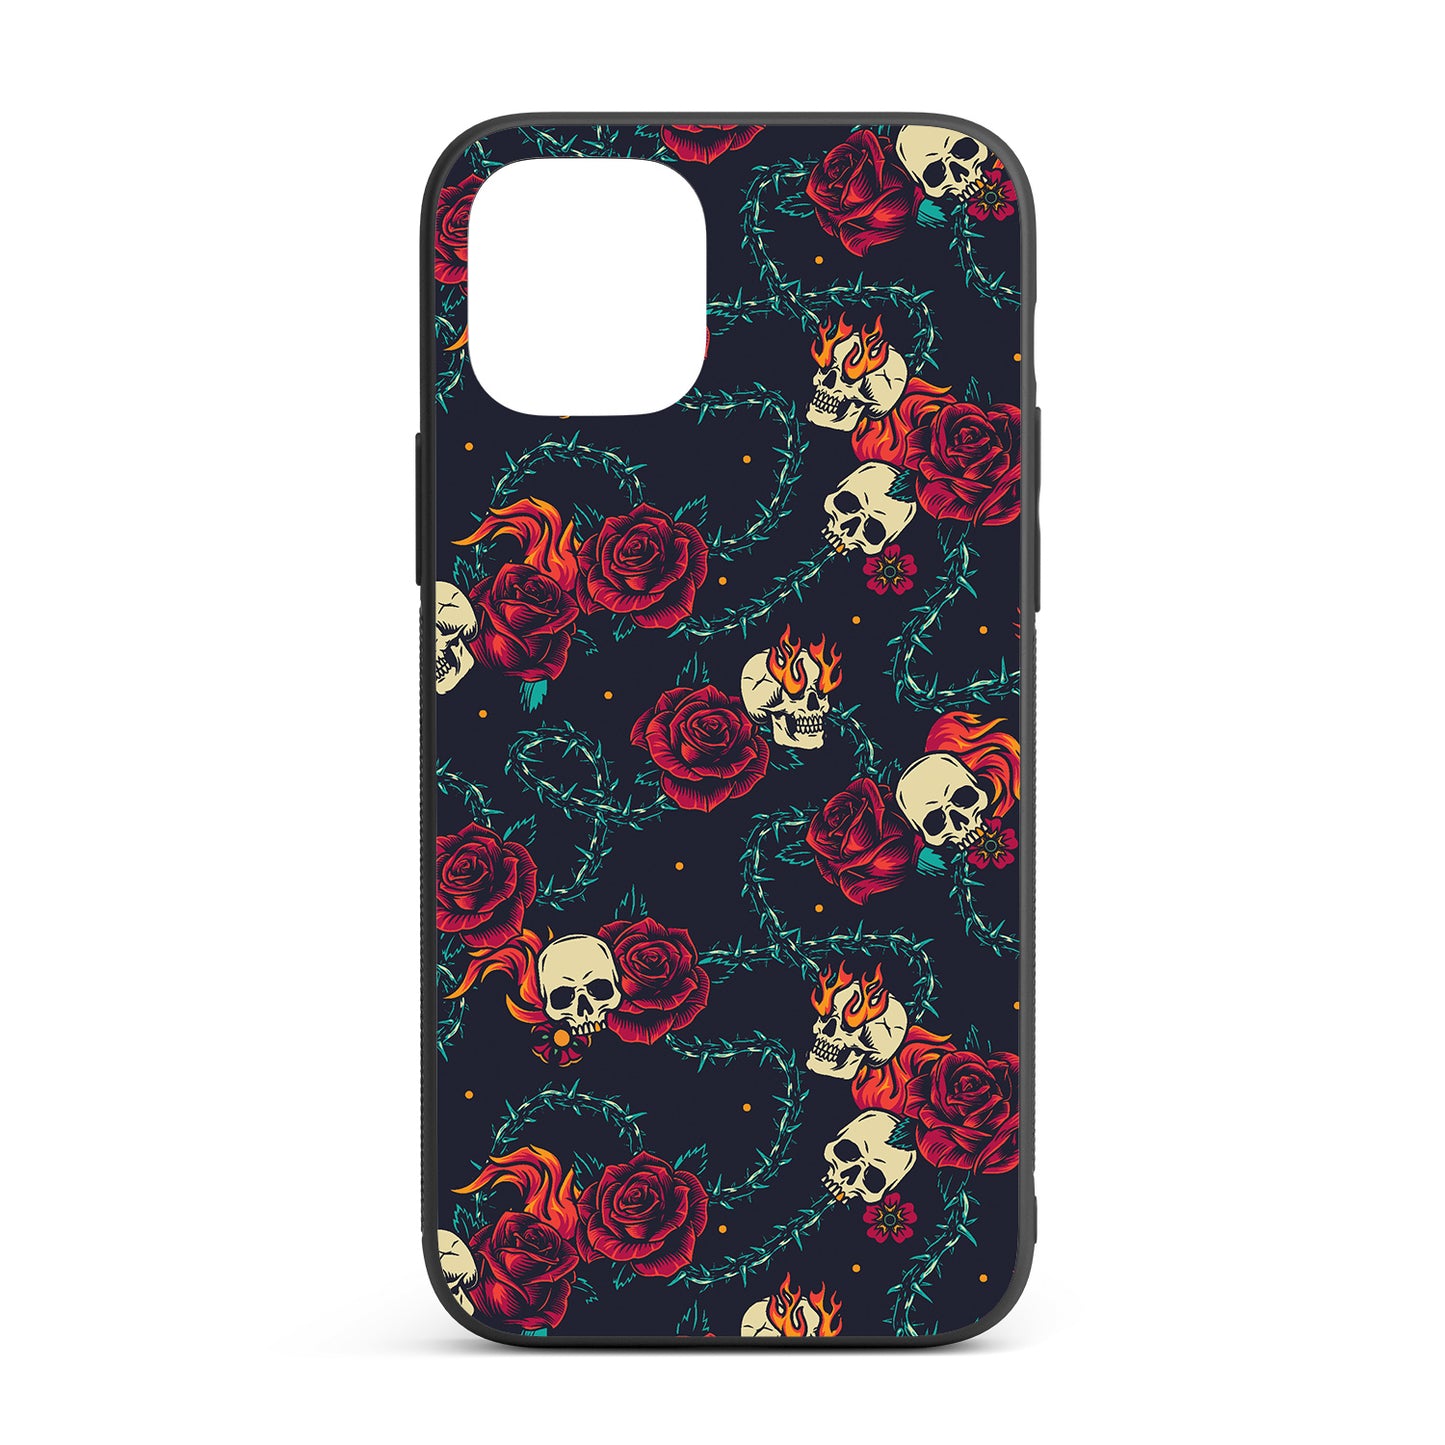 Skulls & Roses iPhone glass case